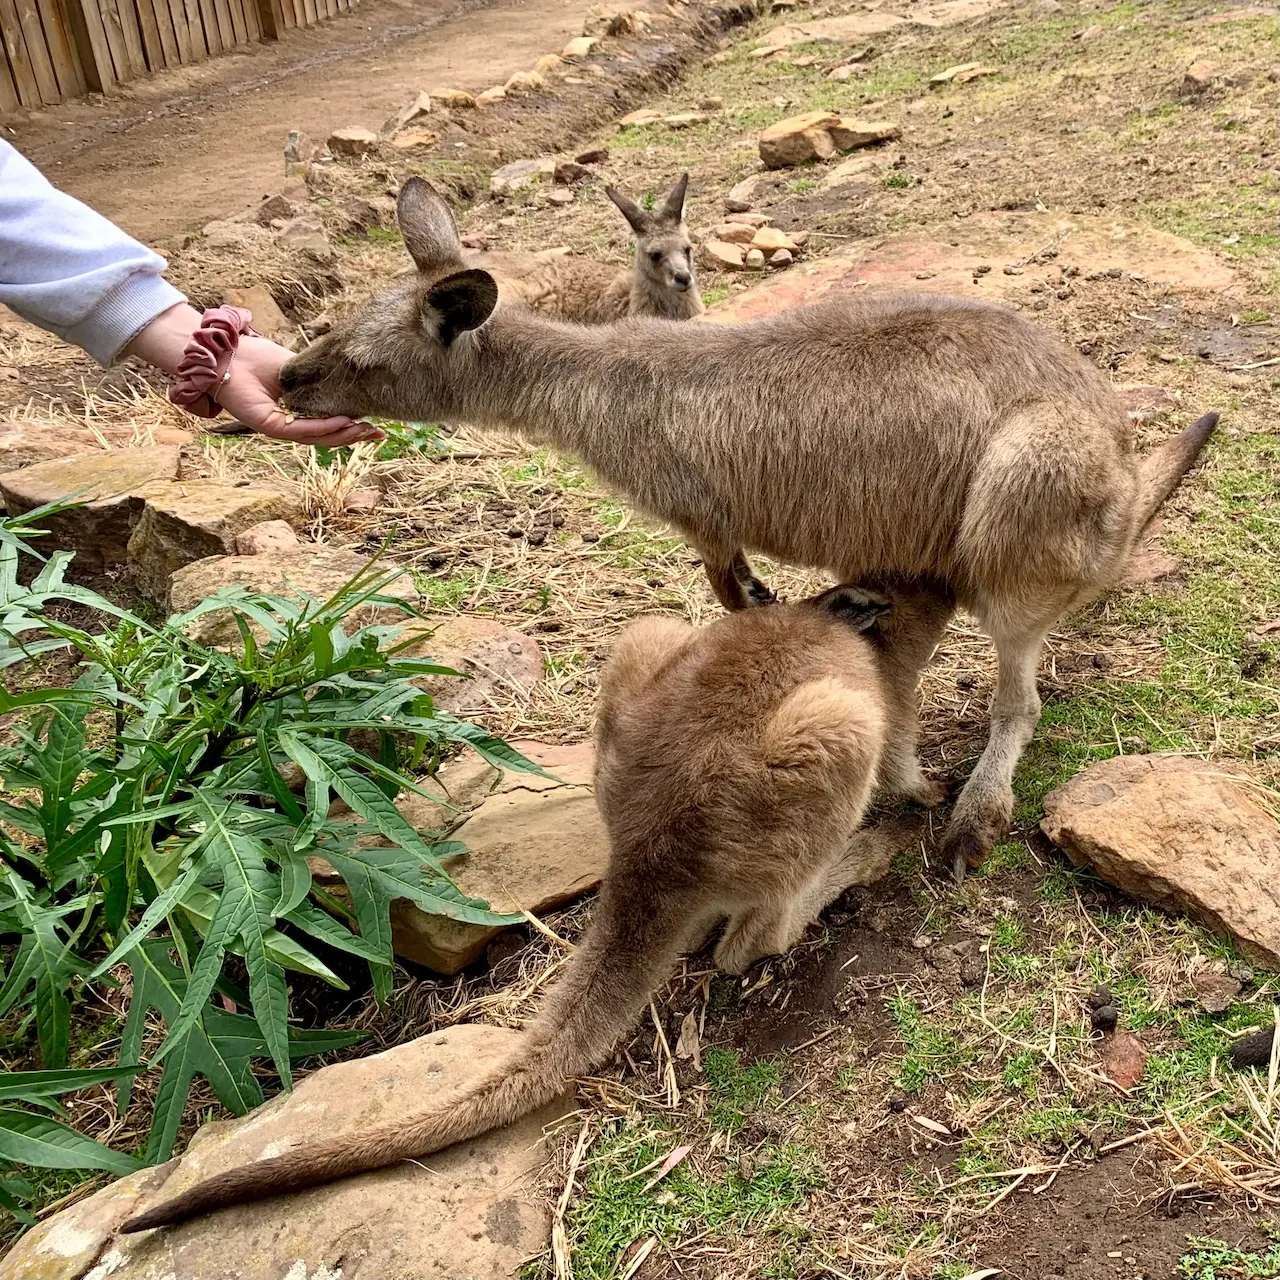 A girl feeding a Kangaroo while the Kangaroo is feeding another Joey